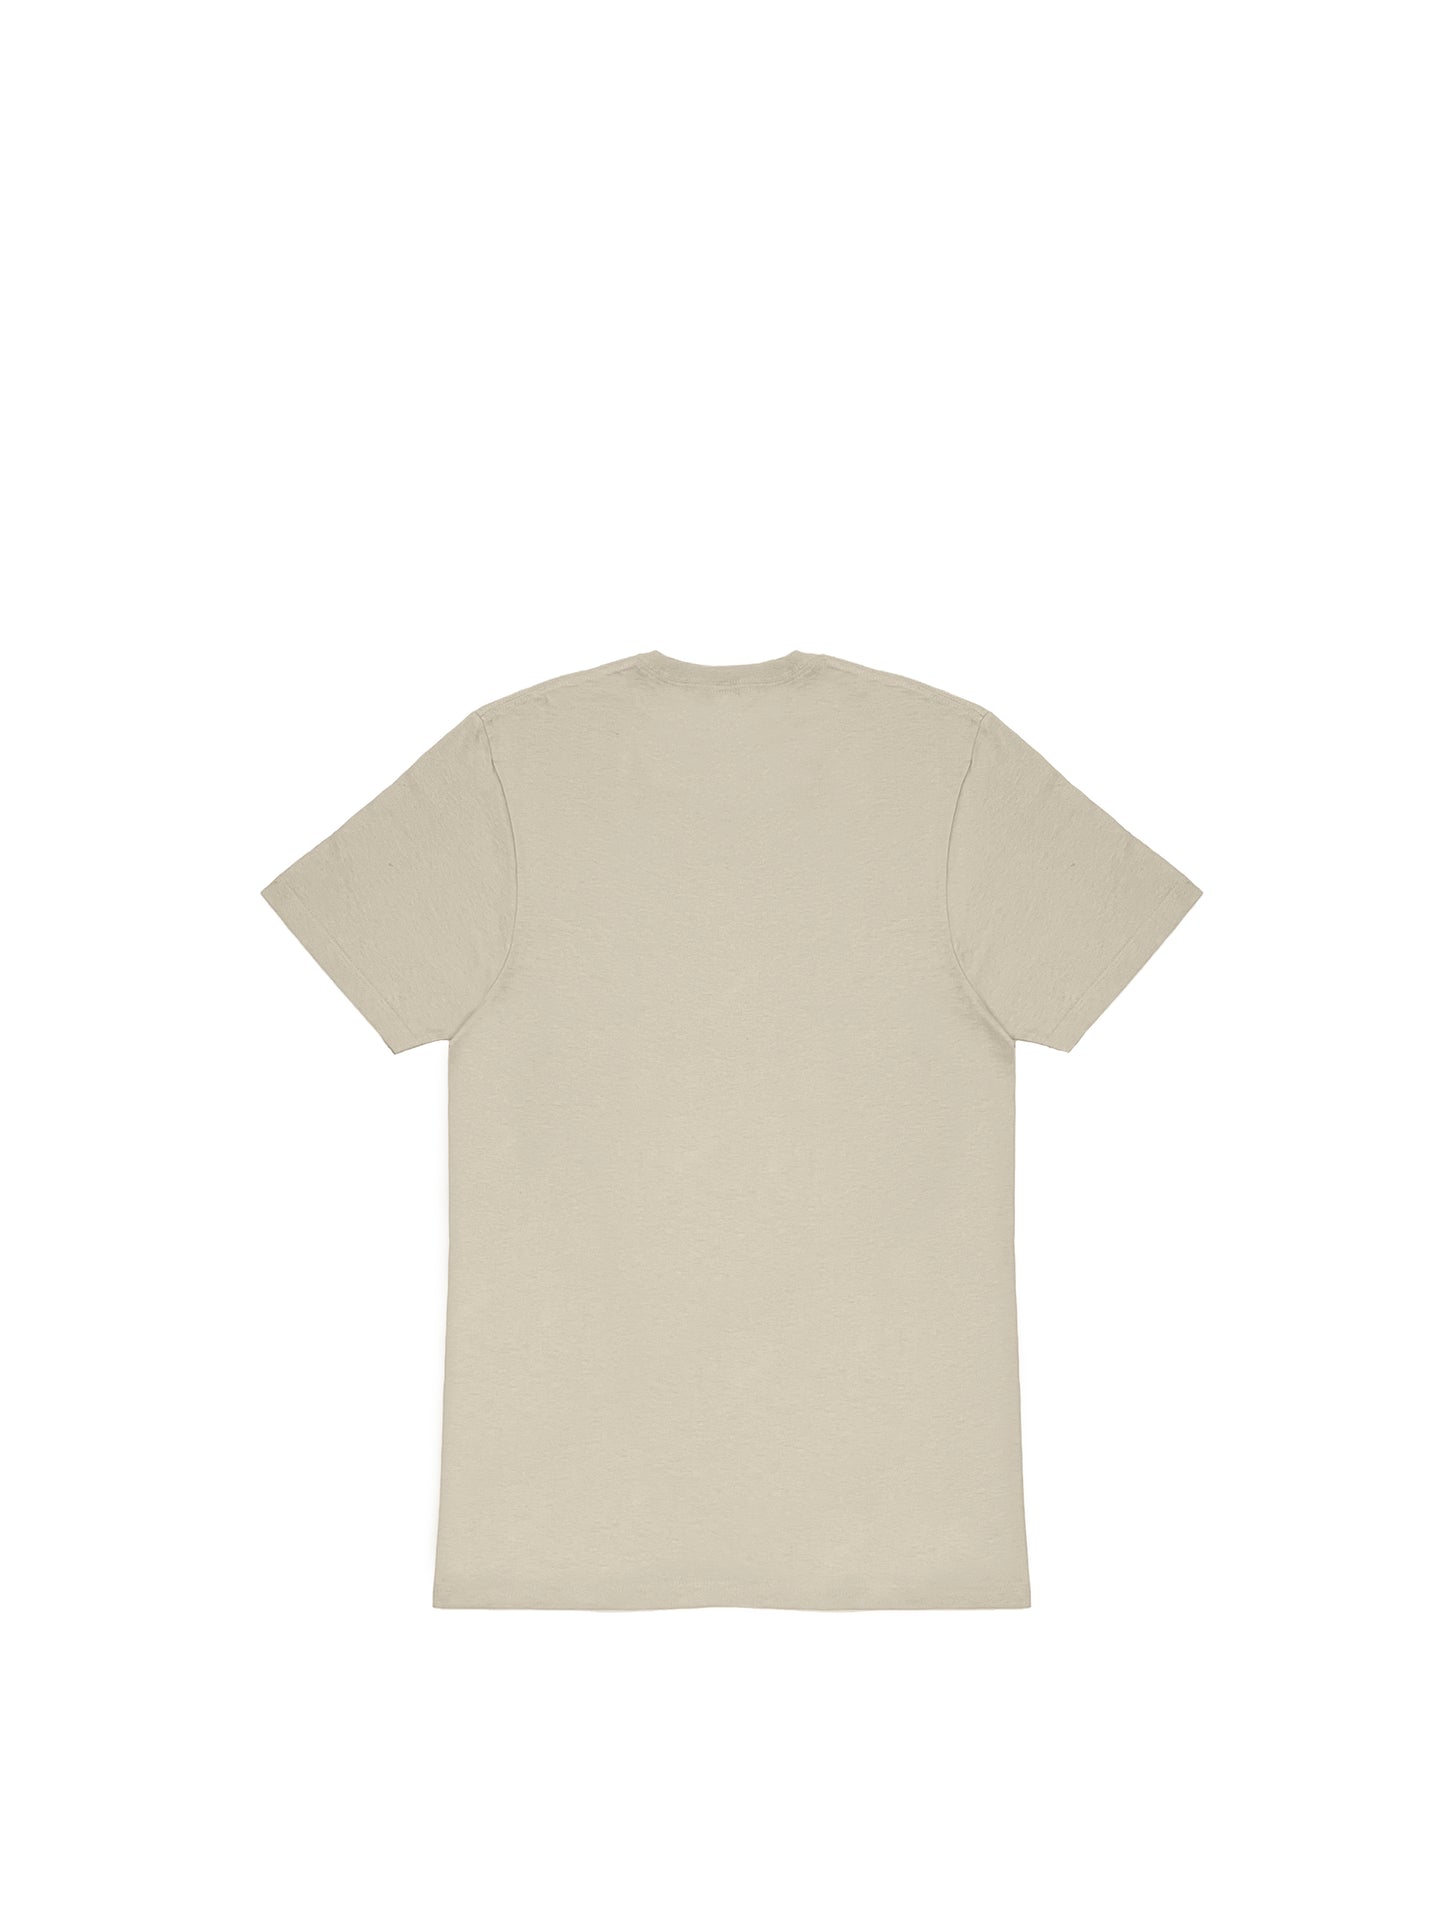 Harvest Army Cotton T Shirt In Beige